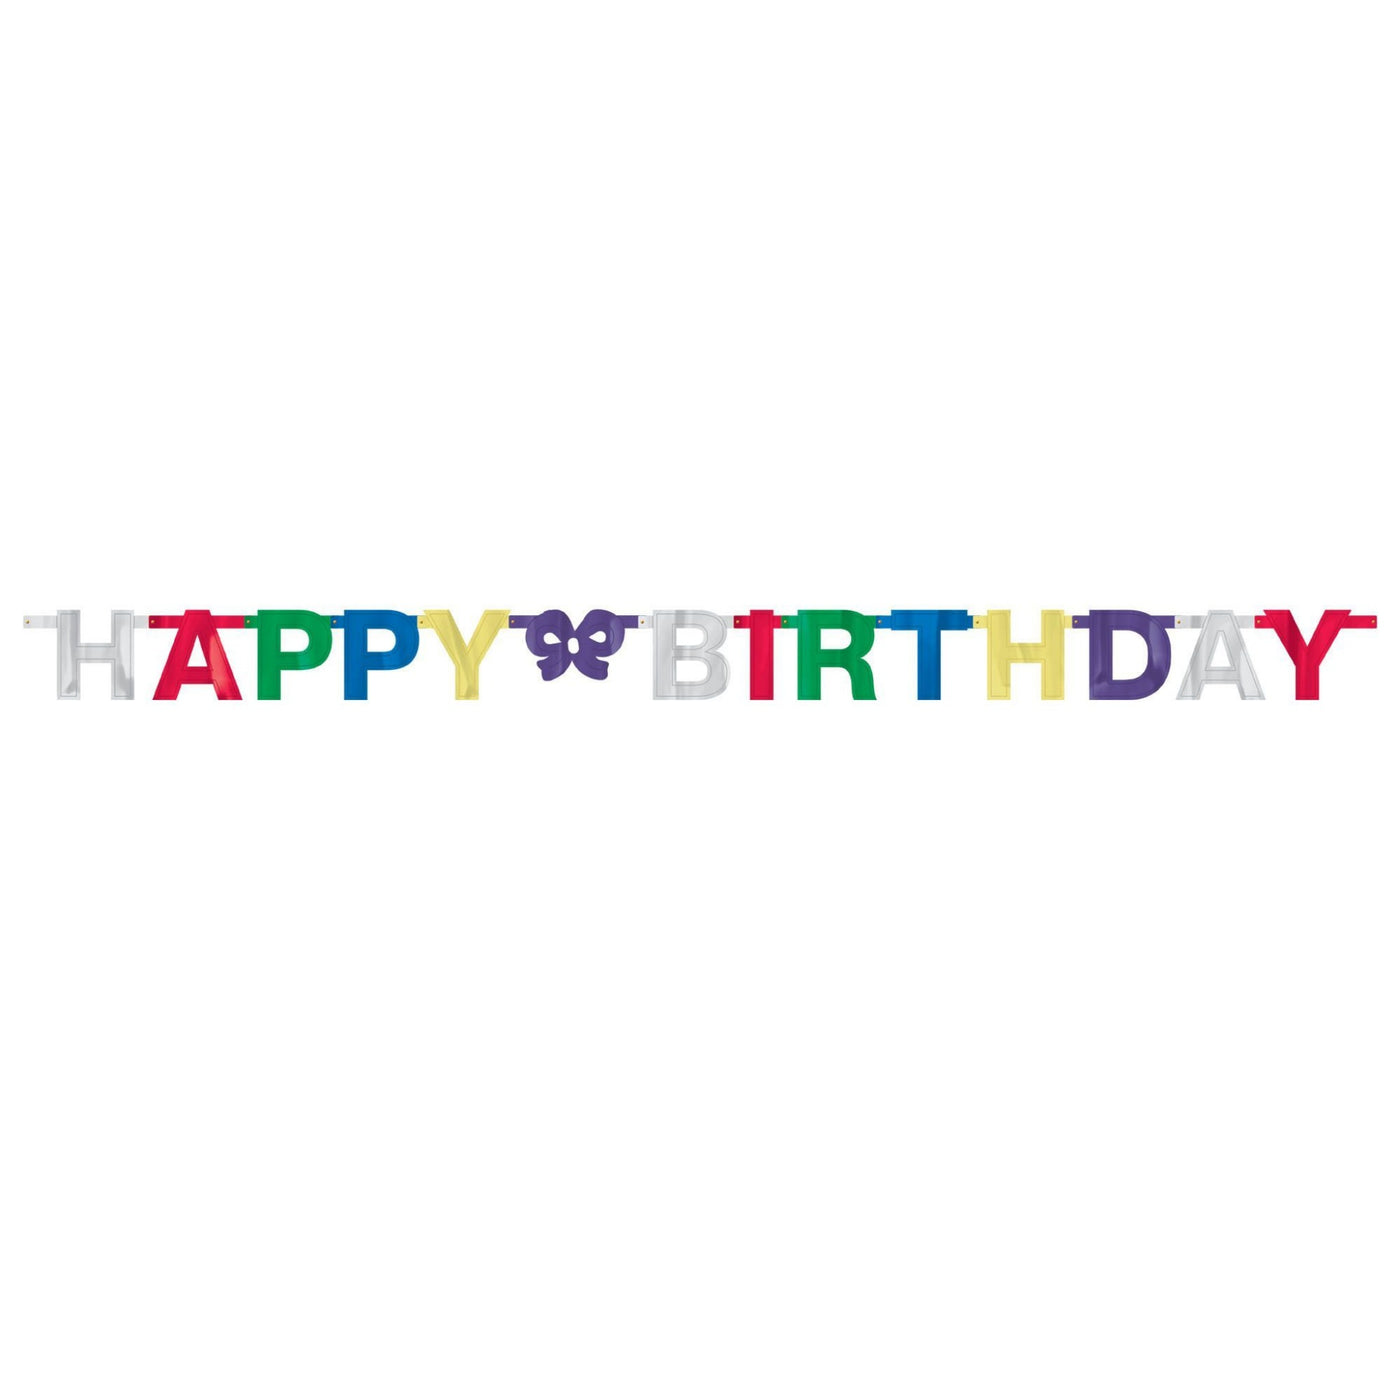 Petite banderole multicolore "Happy Birthday